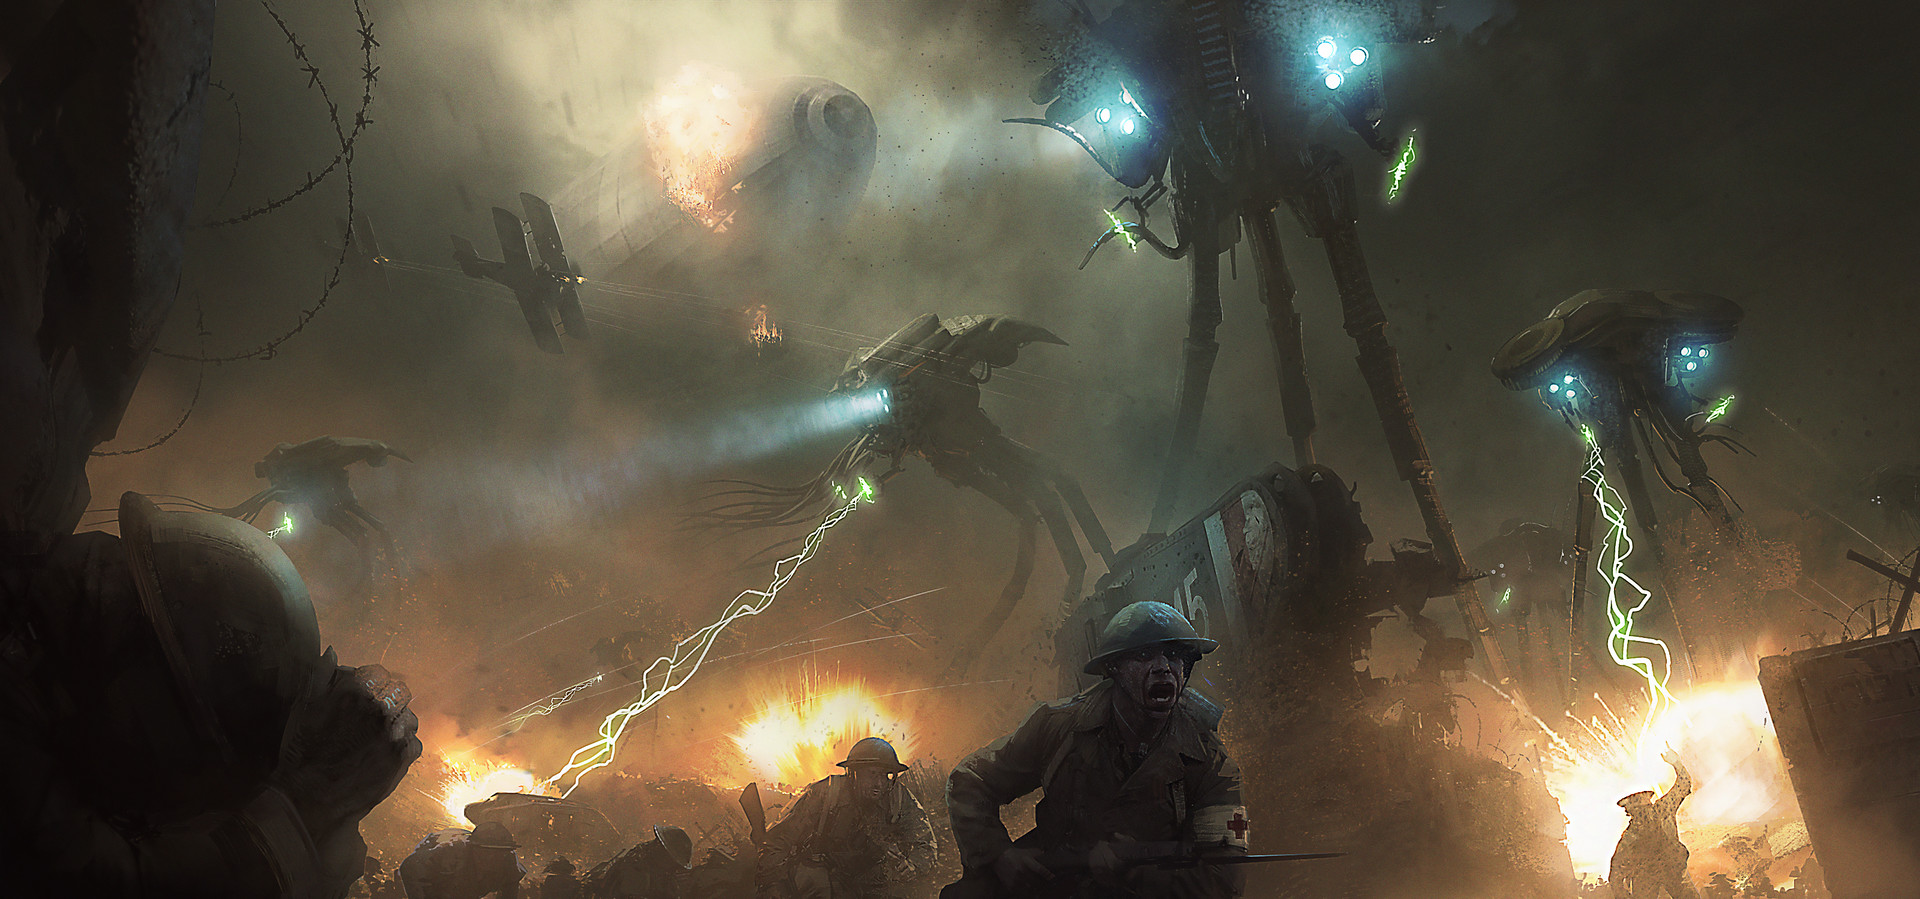 Science Fiction High Tech Aliens War Of The Worlds WWi Biplane Fire Smoke Xenos War Tripods 1920x899